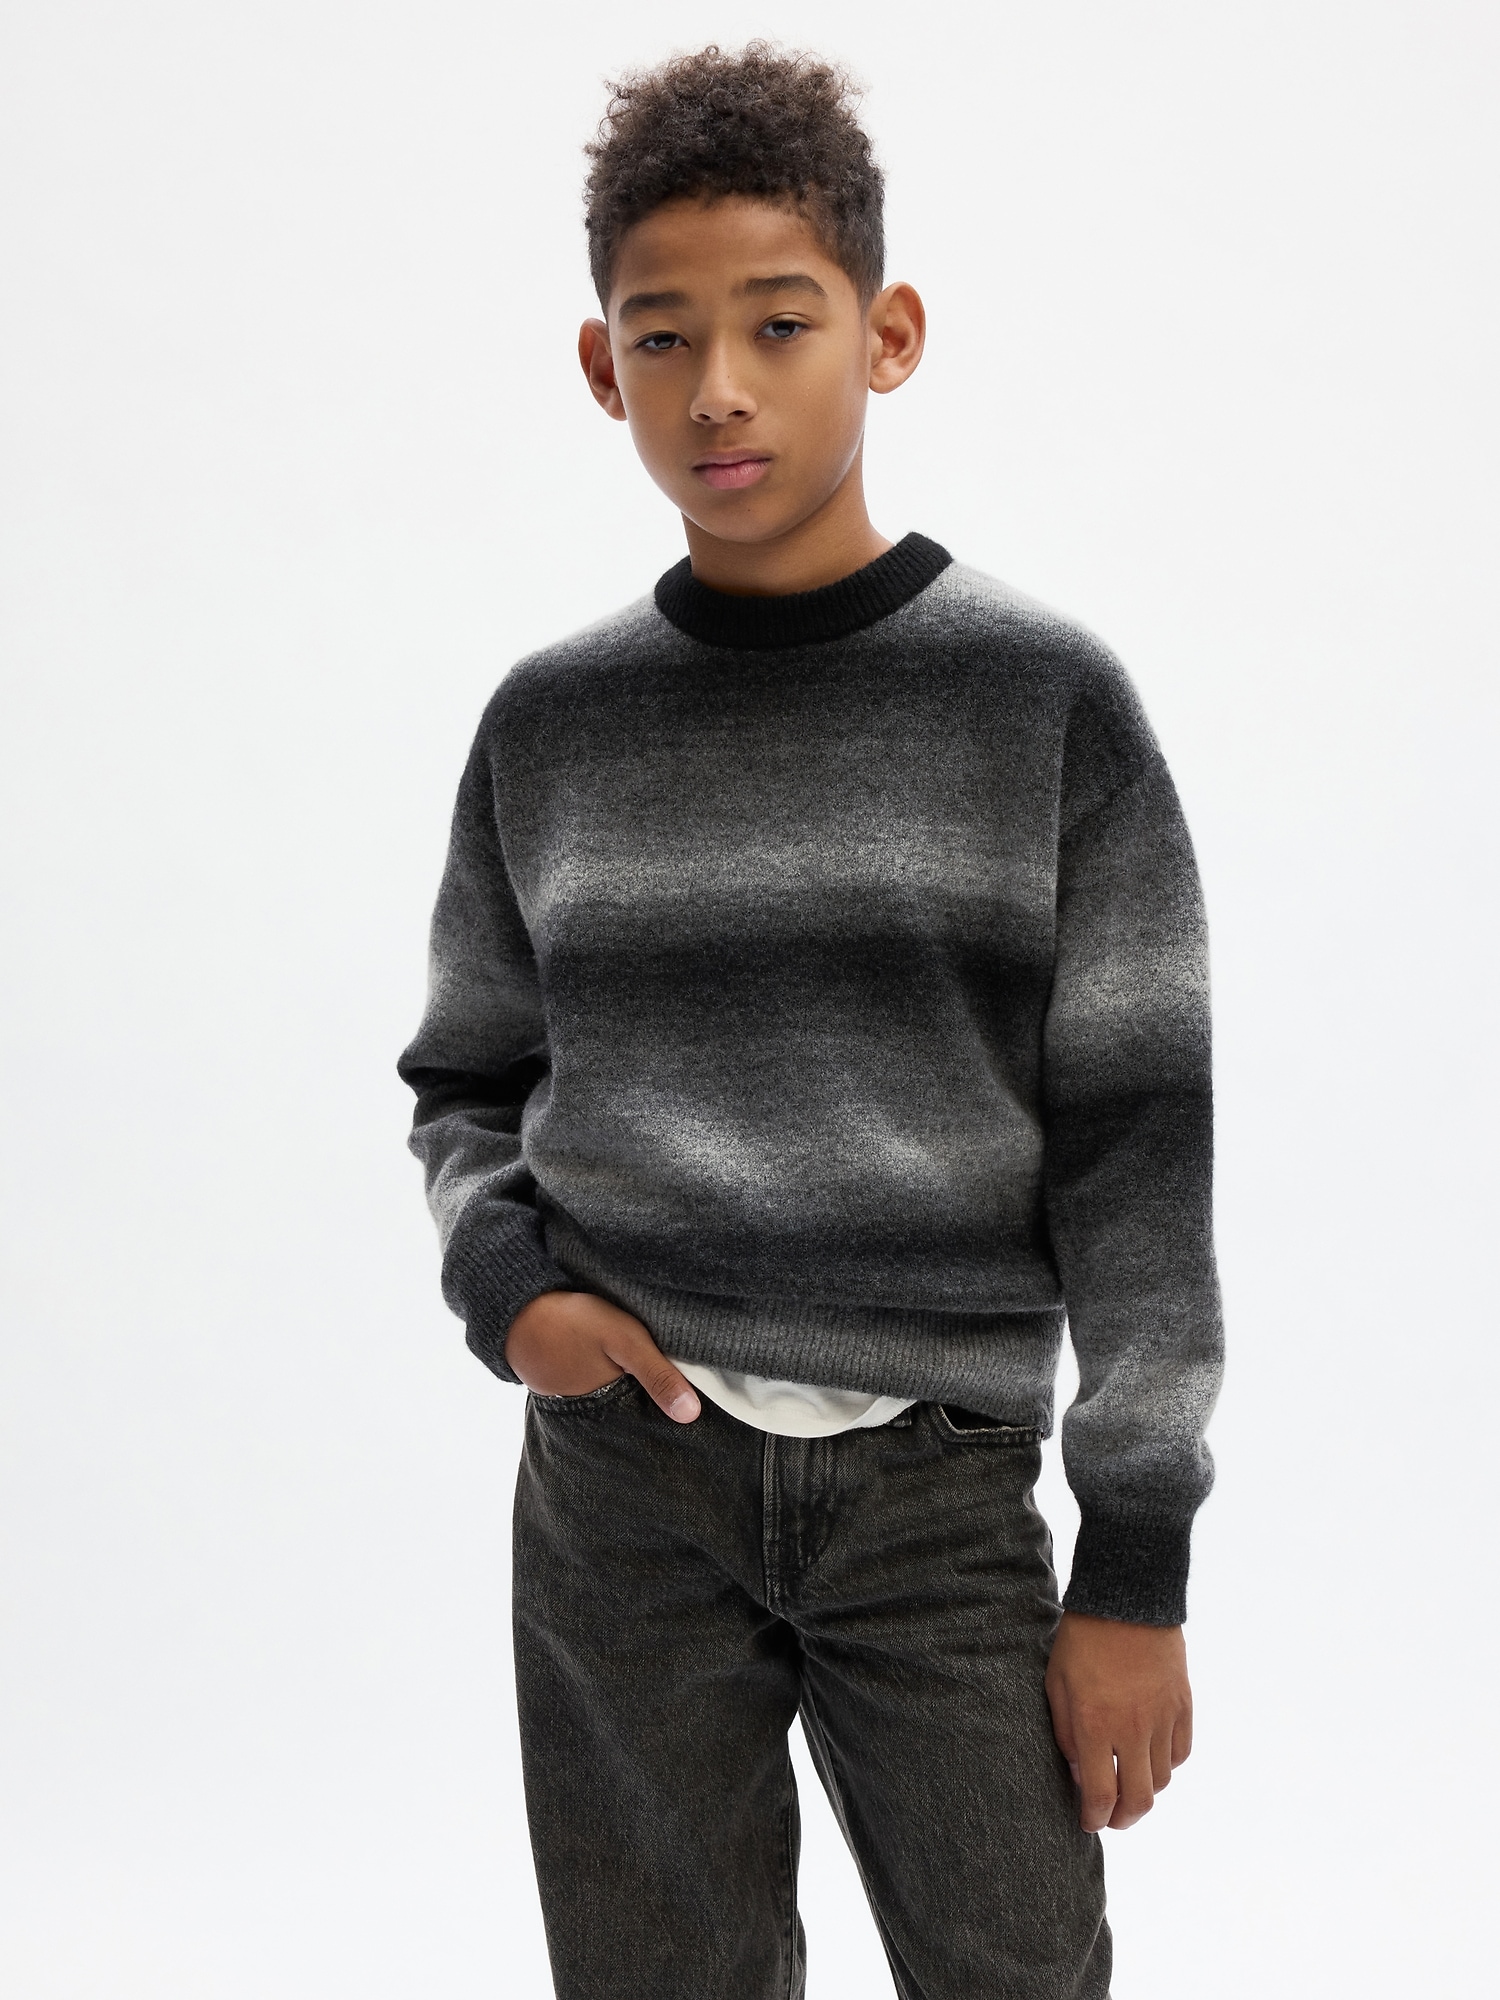 Pullovers | Kids Gap